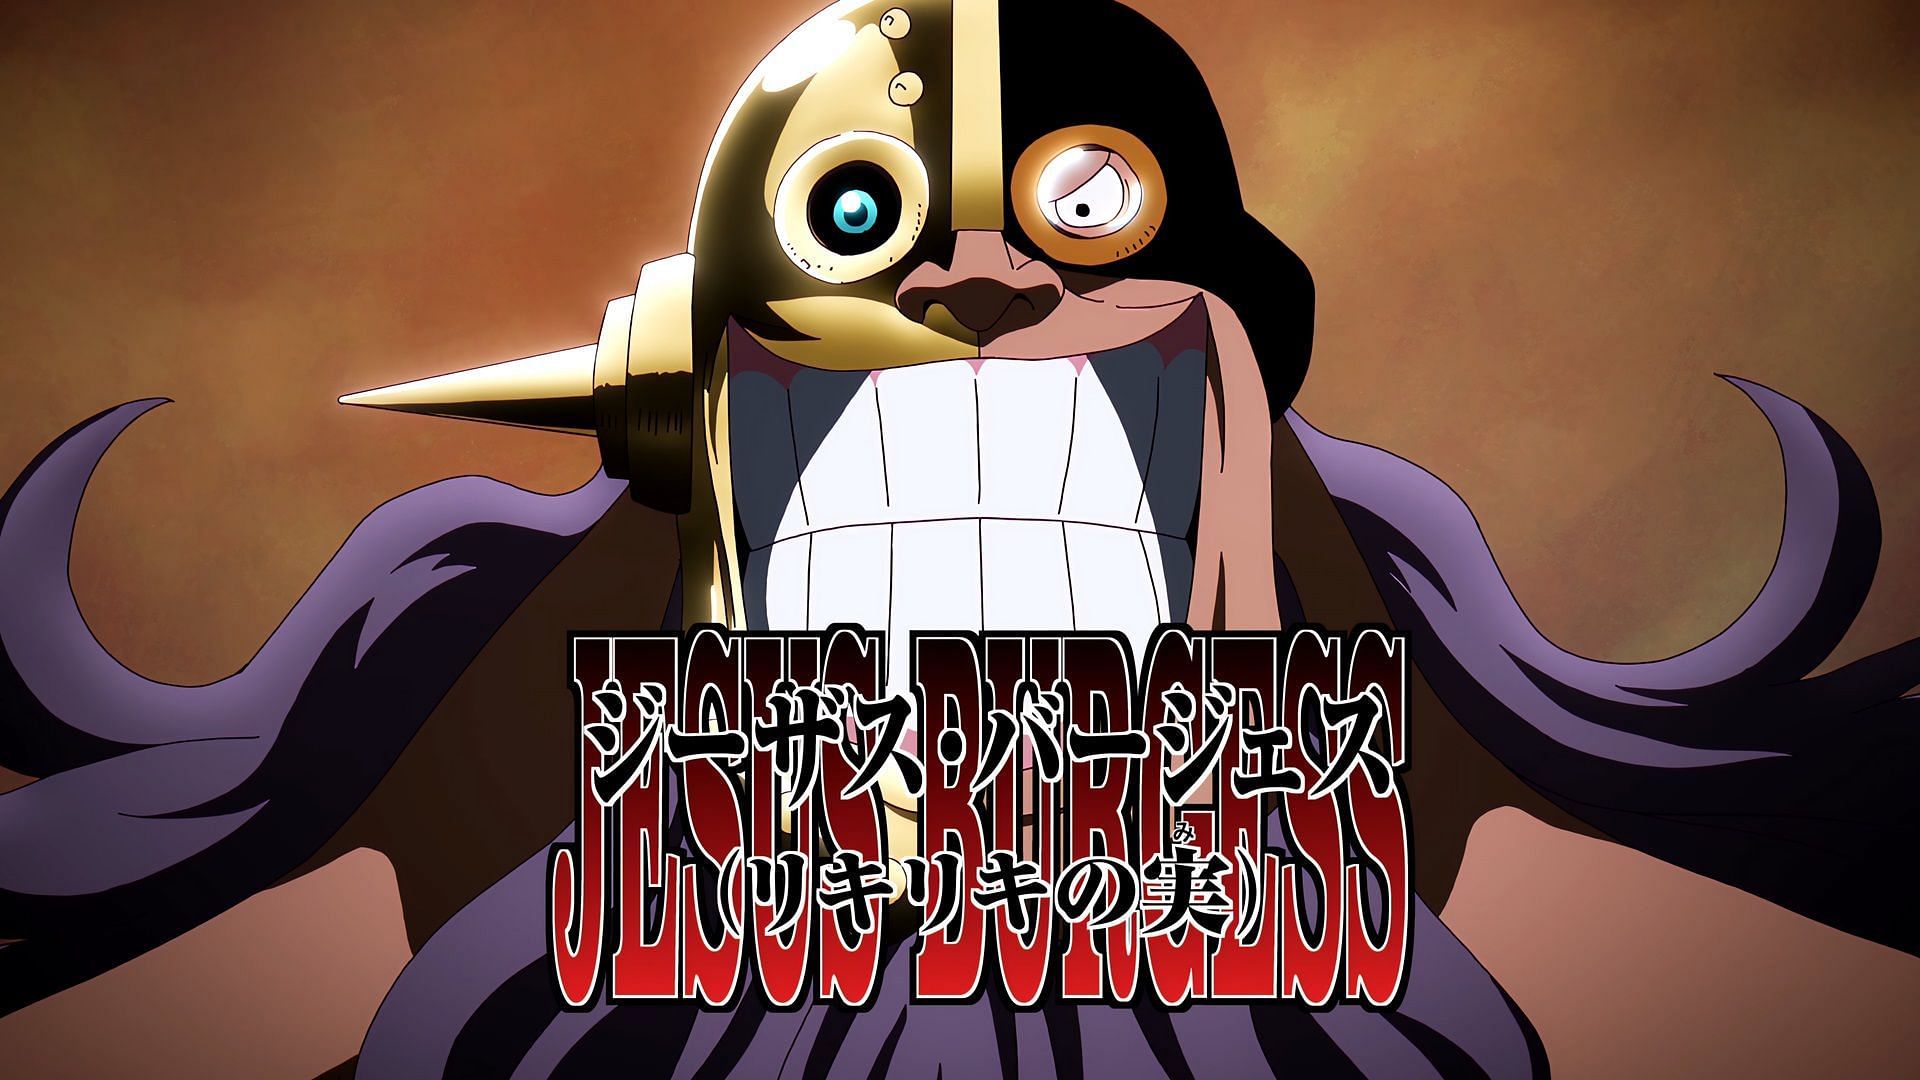 Jesus Burgess as seen in the One Piece anime (Image via Toei Animation)